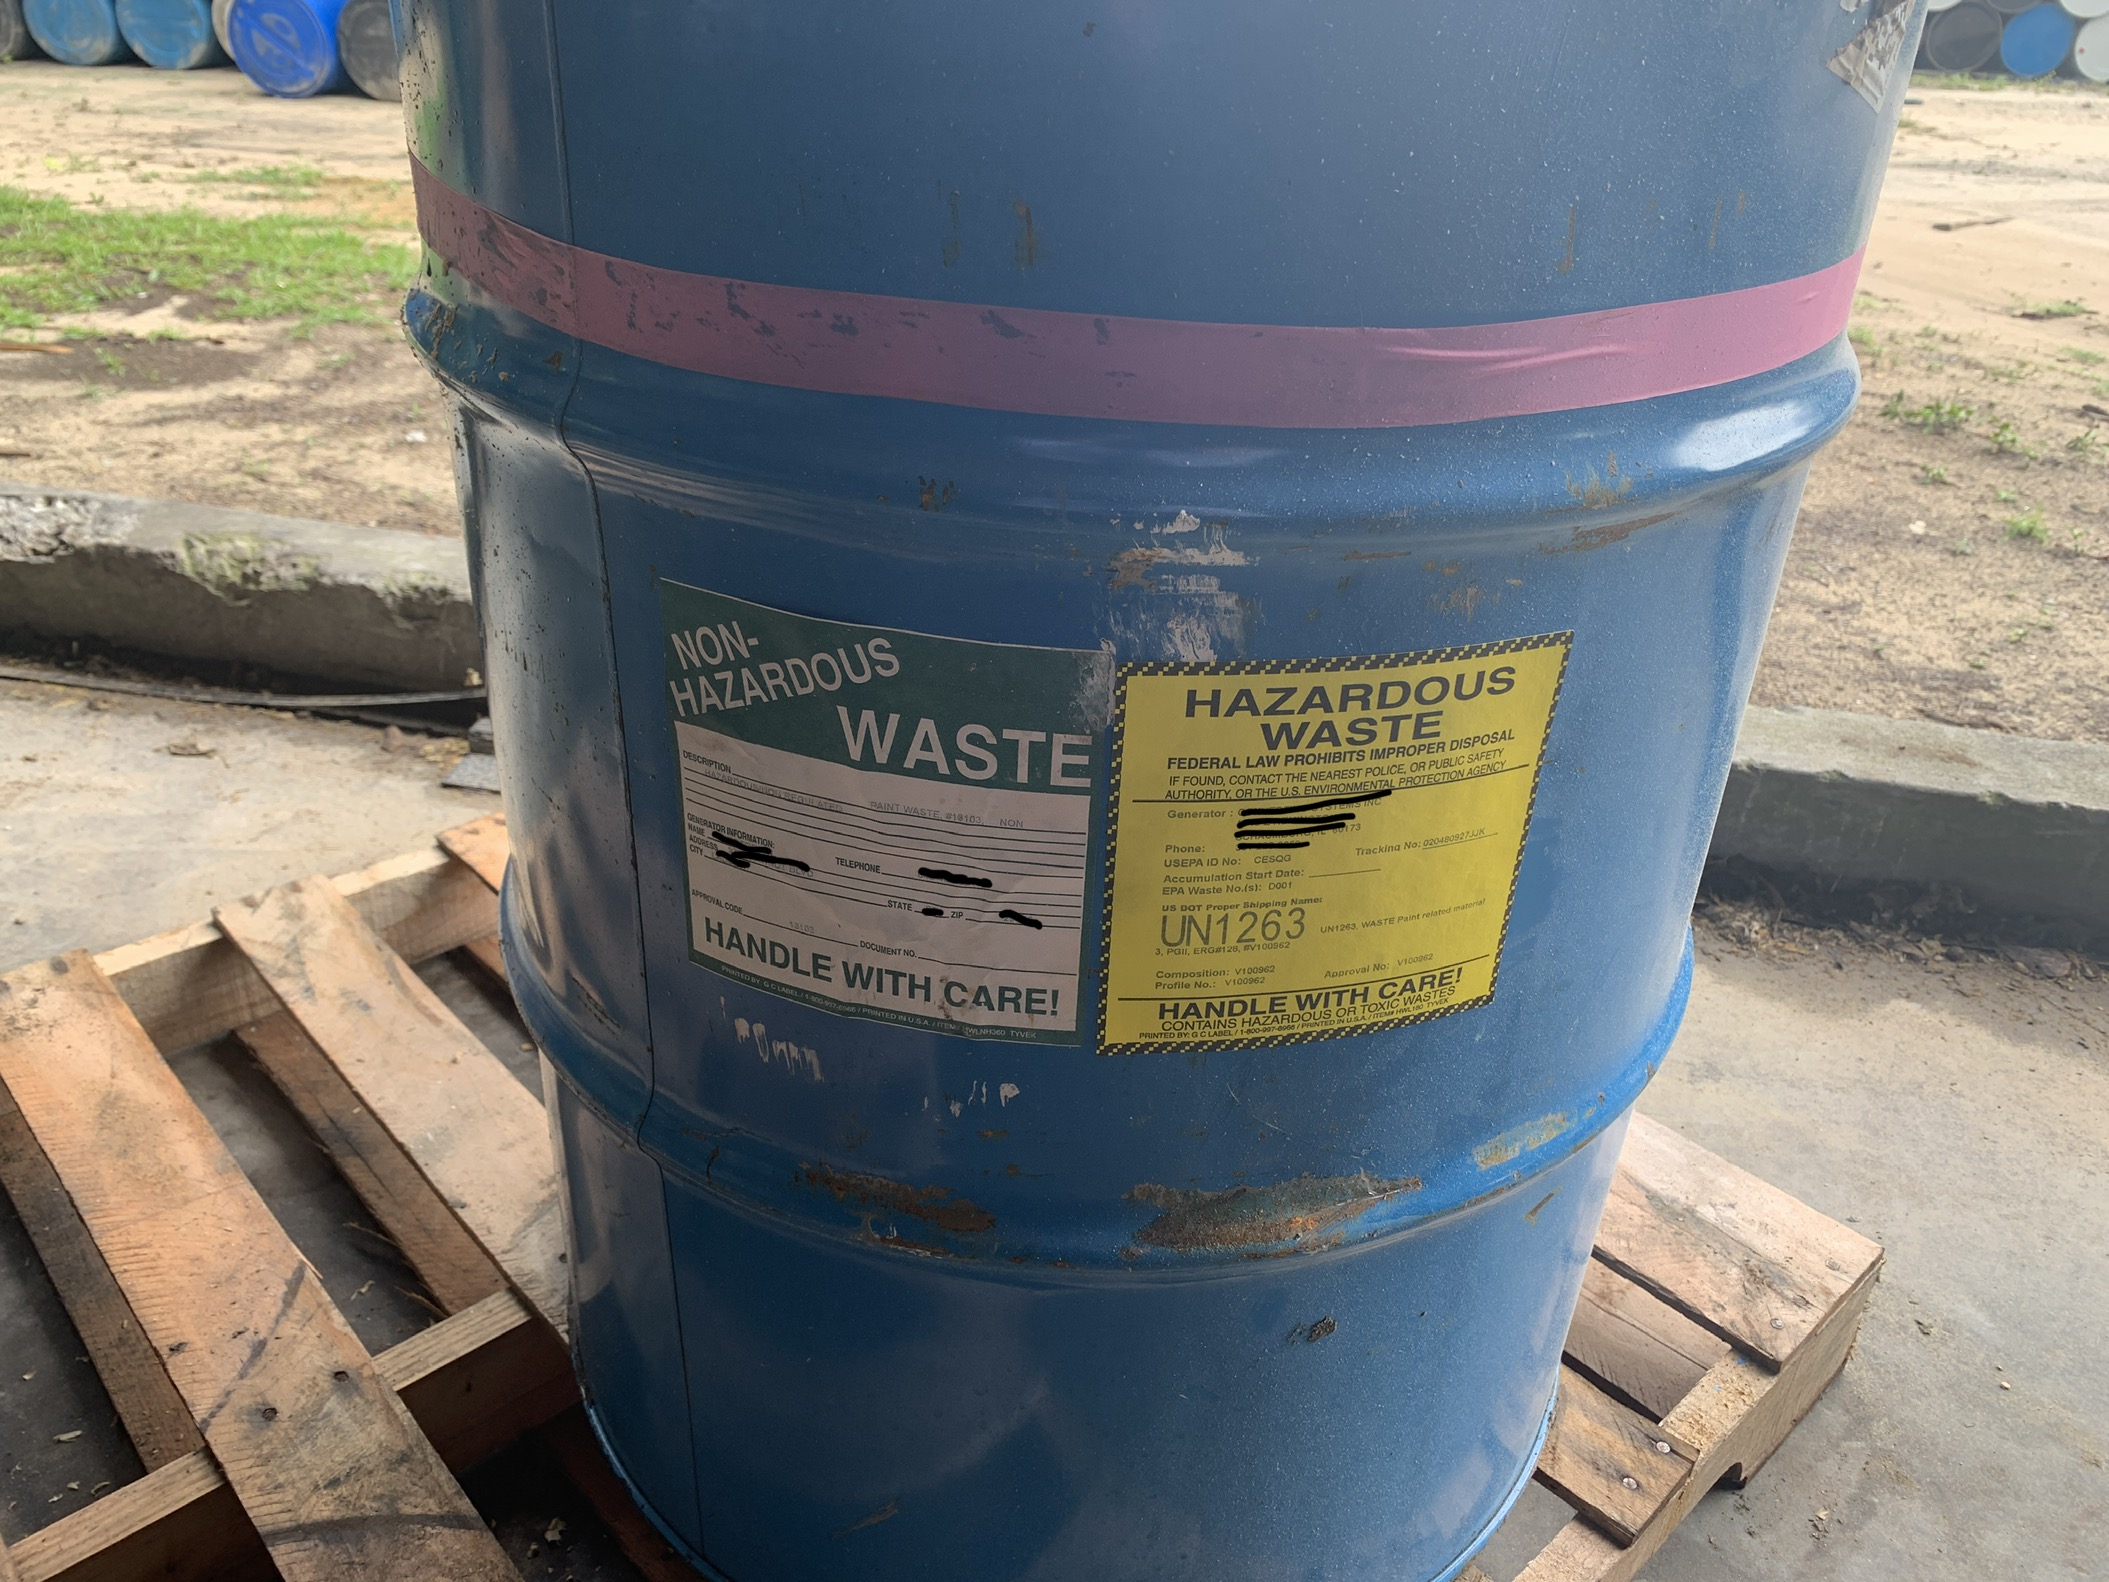 Hazardous waste disposal drum labeled